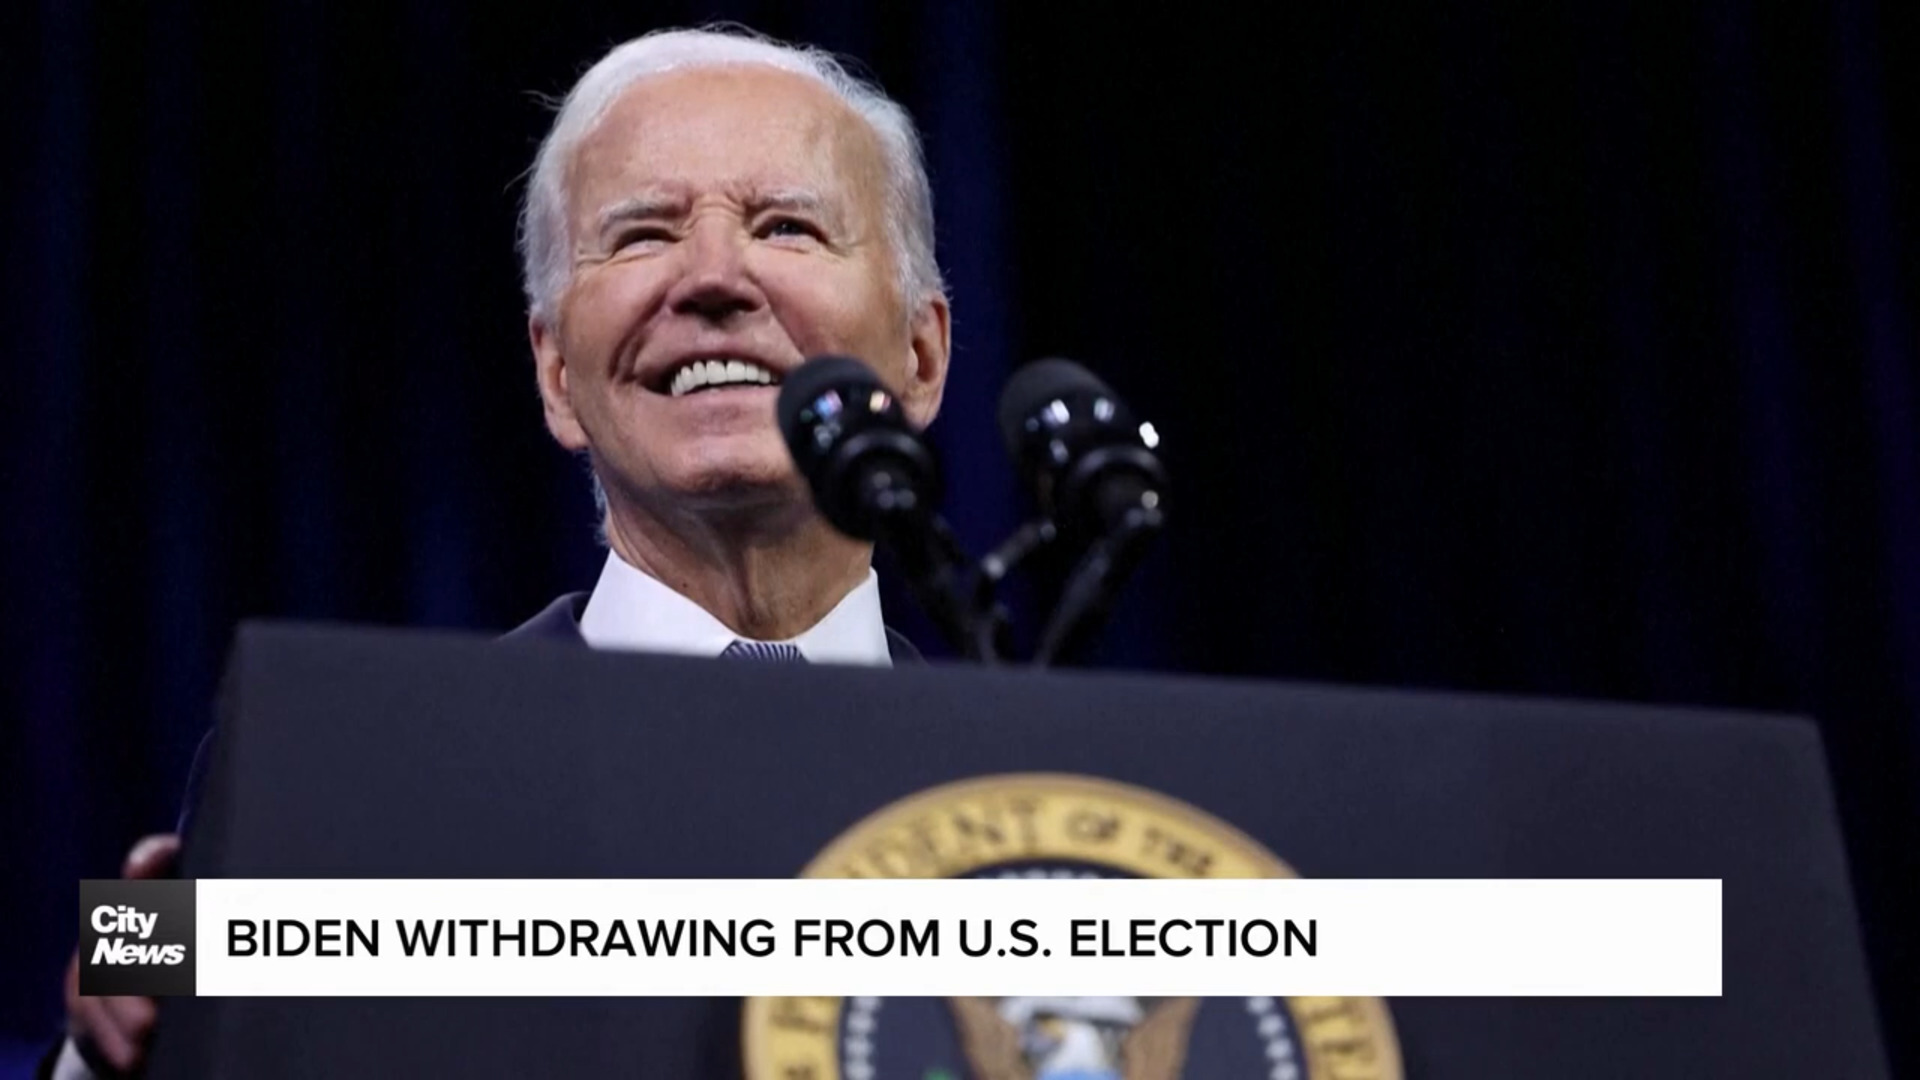 Biden backs out of 2024 U.S. Presidential race